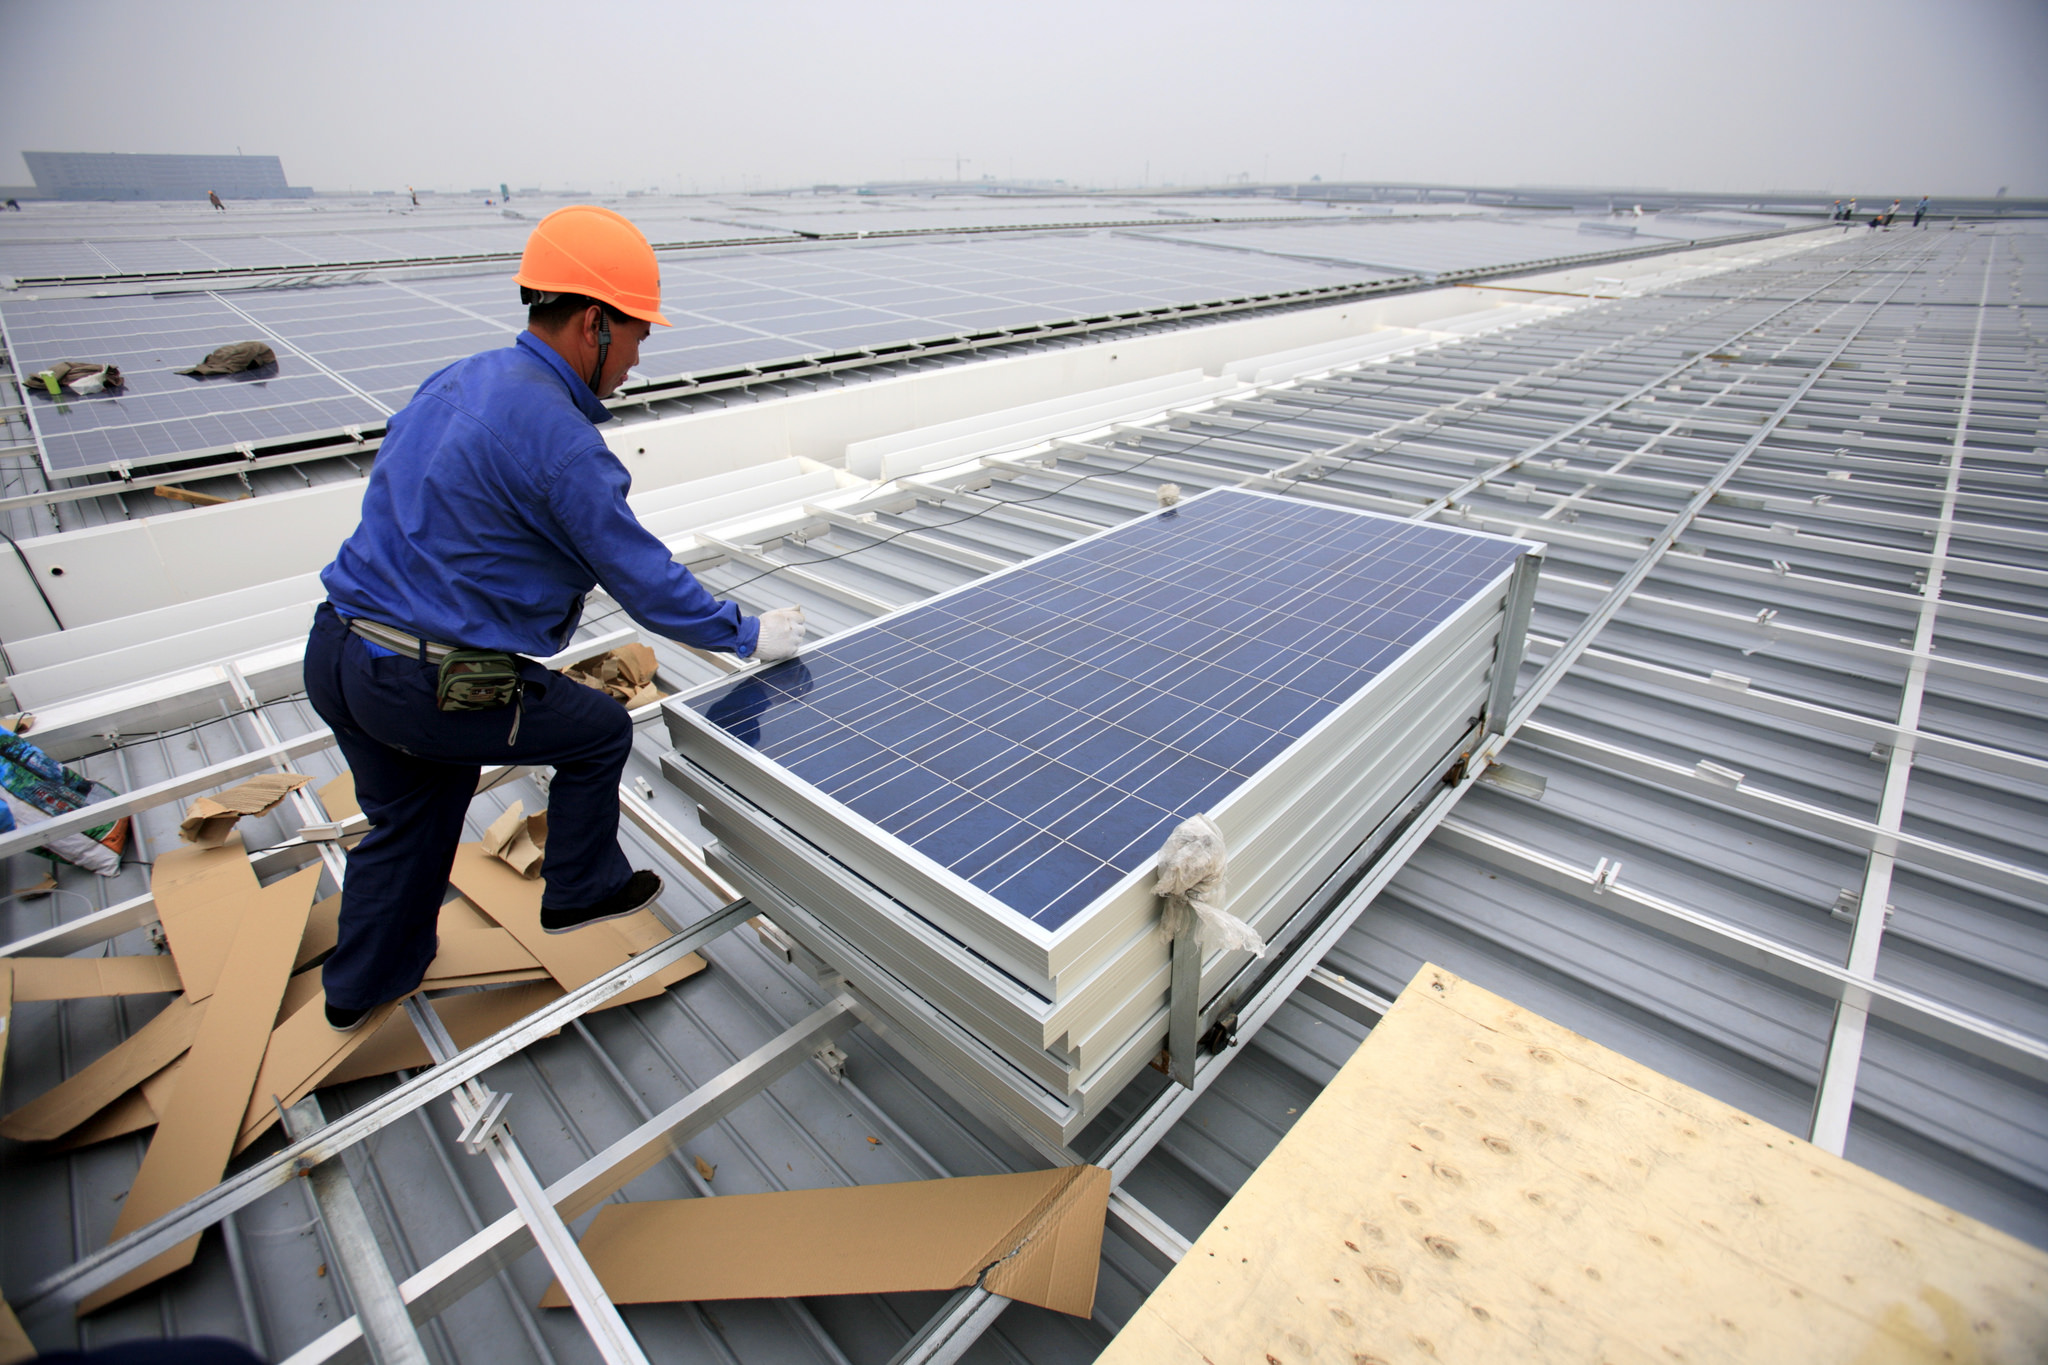 <p>Solar roof installation in Shanghai, China. (Image: Jiri Rezac)</p>